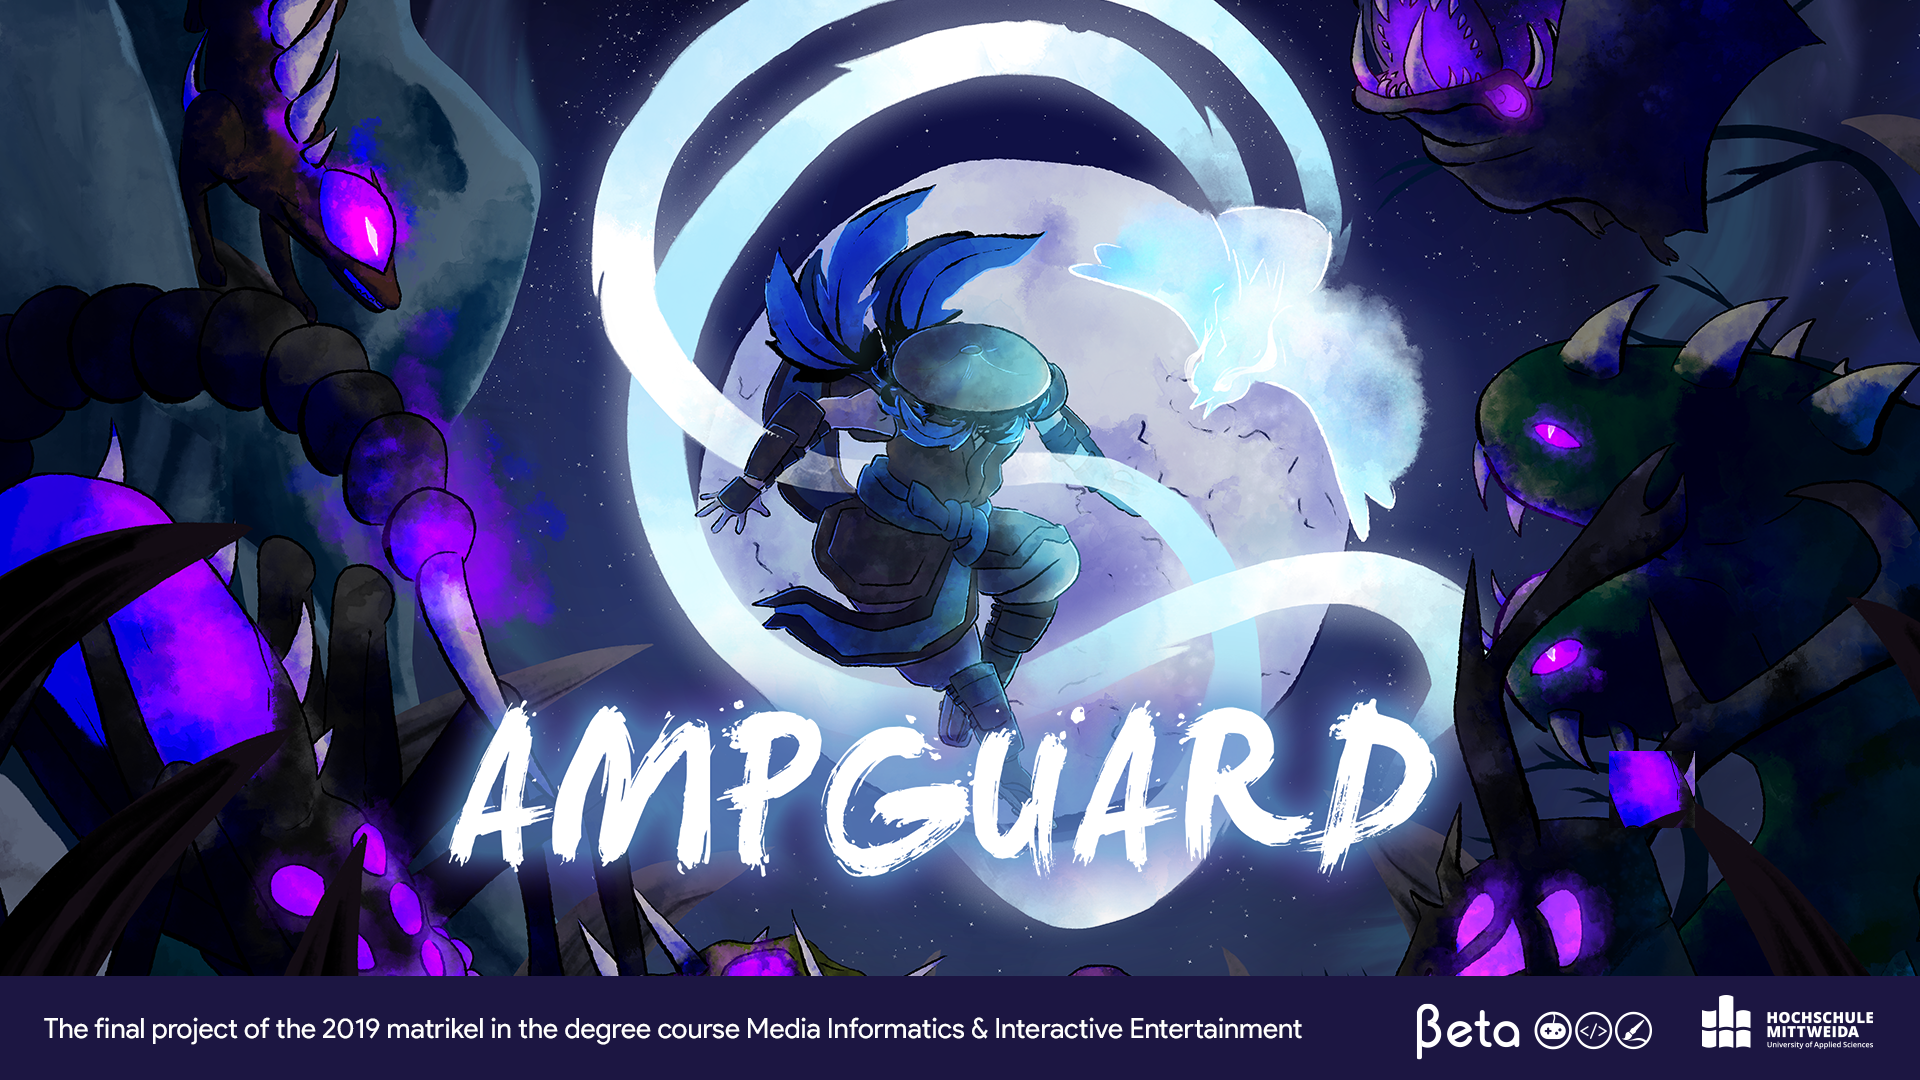 Ampguard